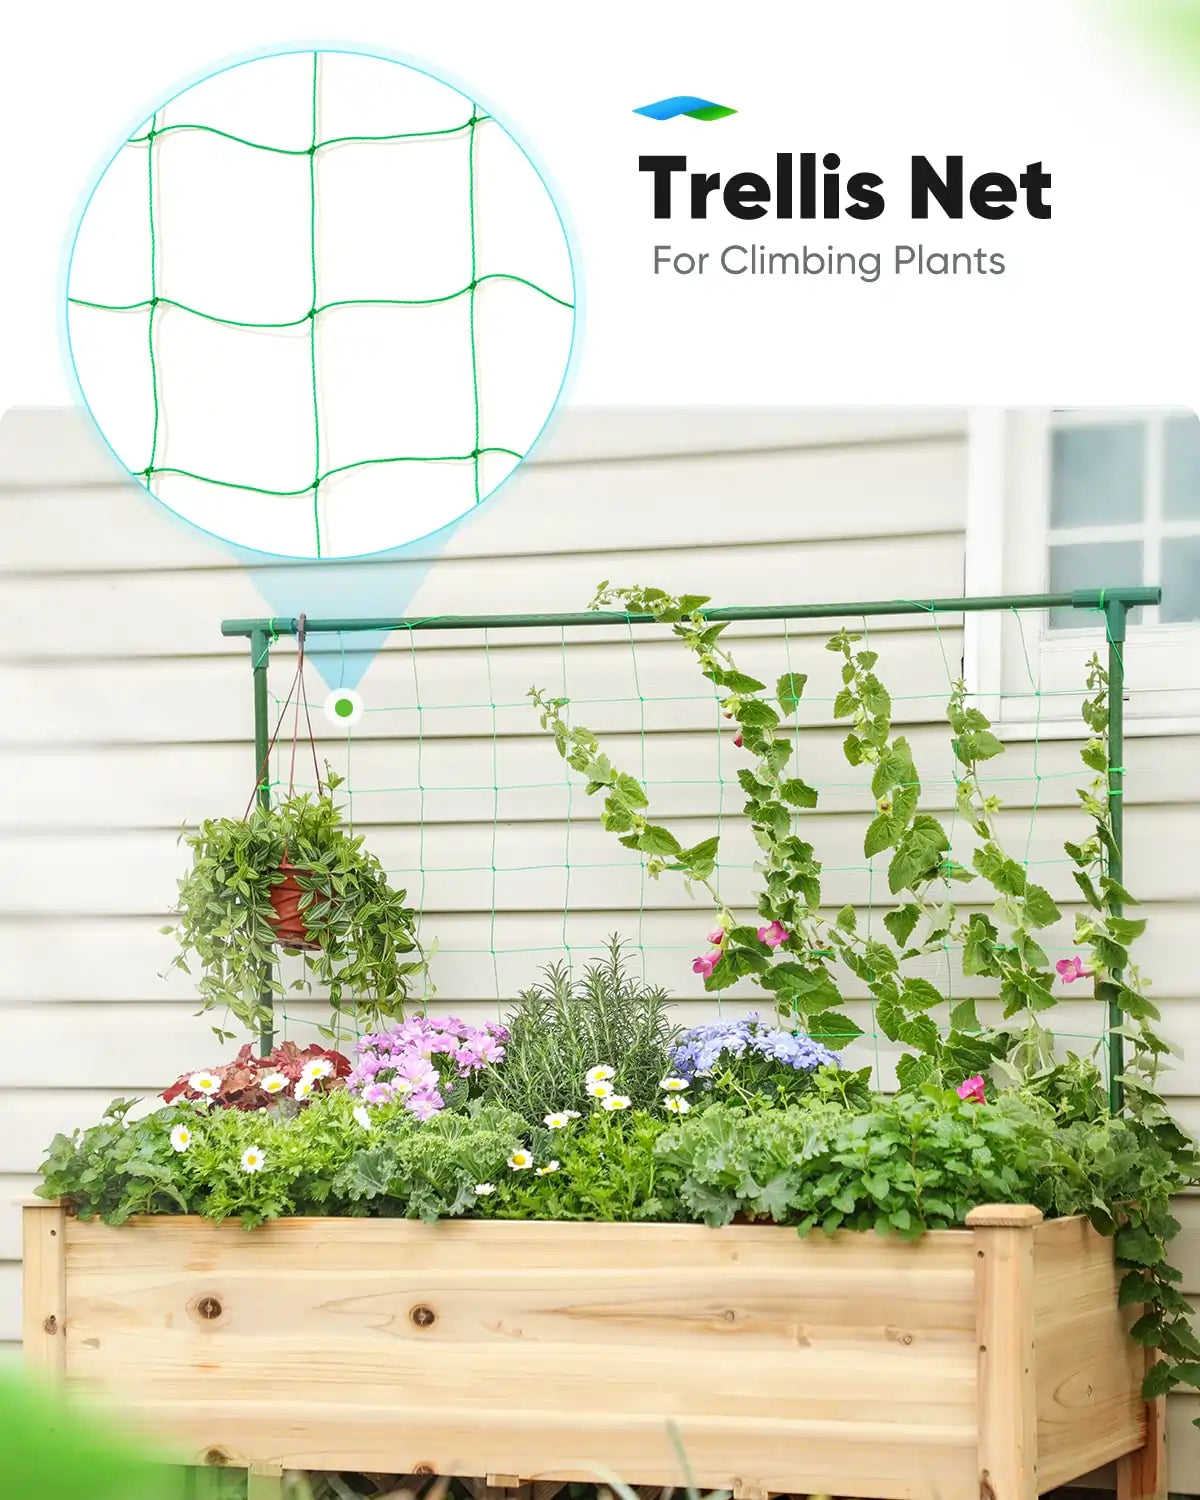 Trellis net for climbing plants